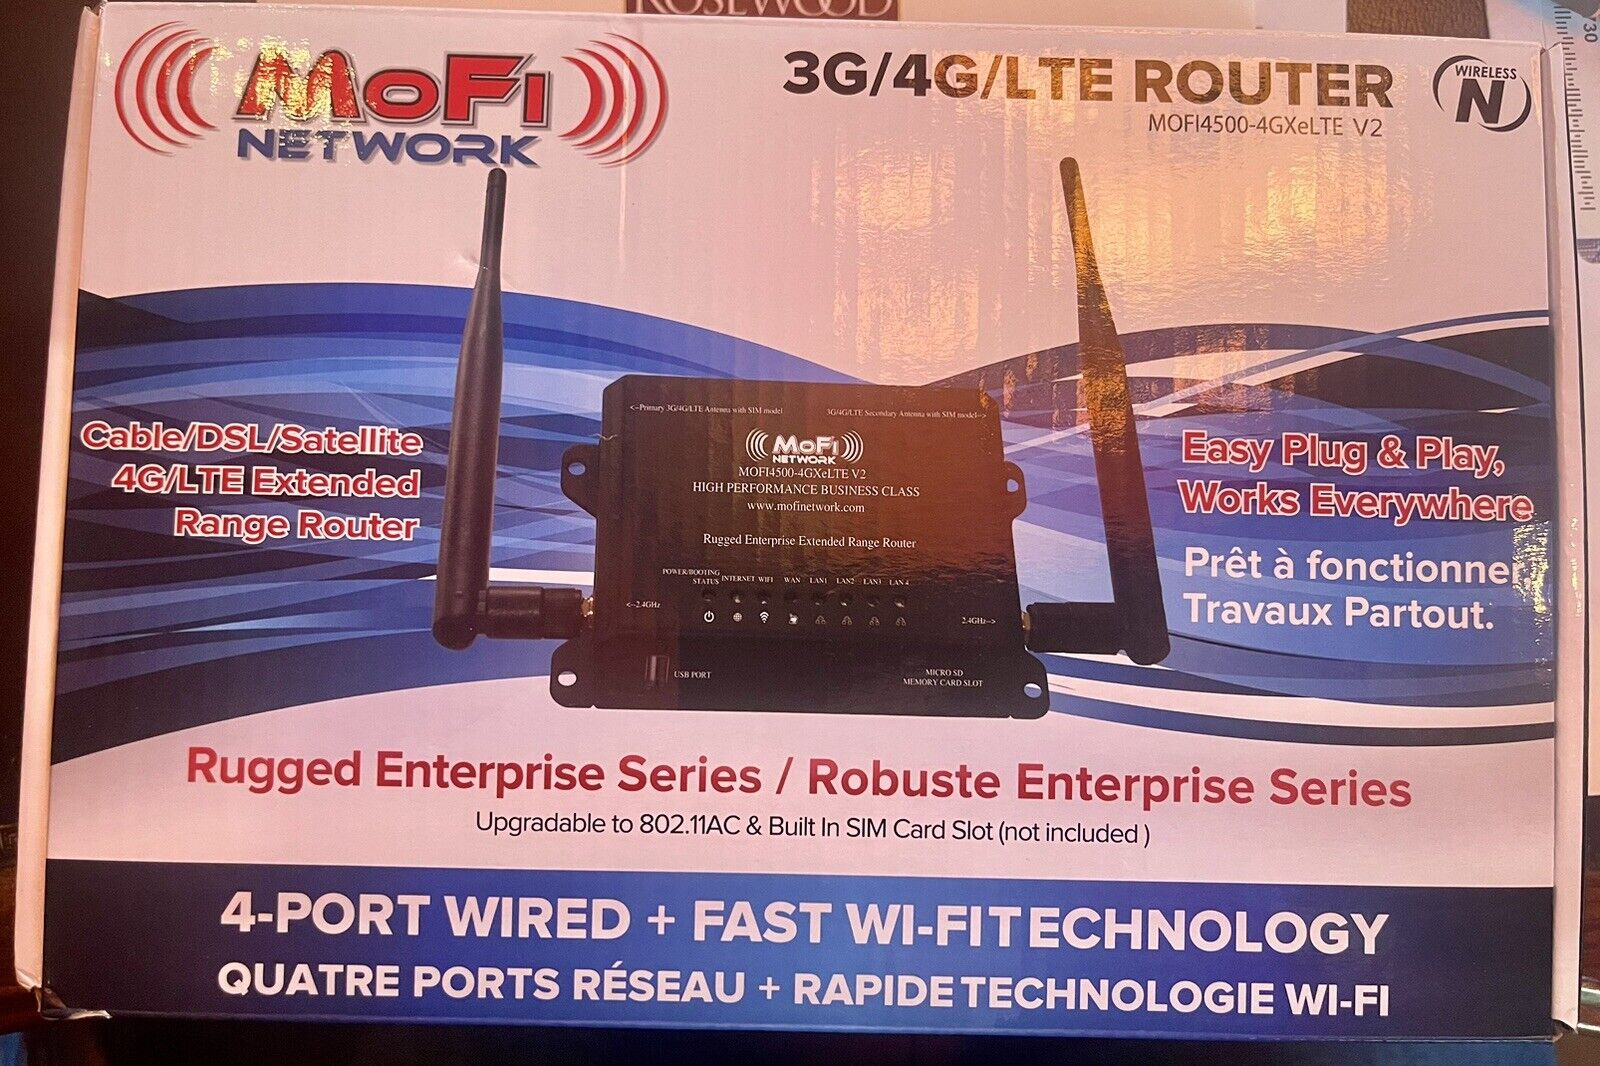 Mofi Network MOFI4500-4GXeLTE SIM 7 V2 4G/LTE Router